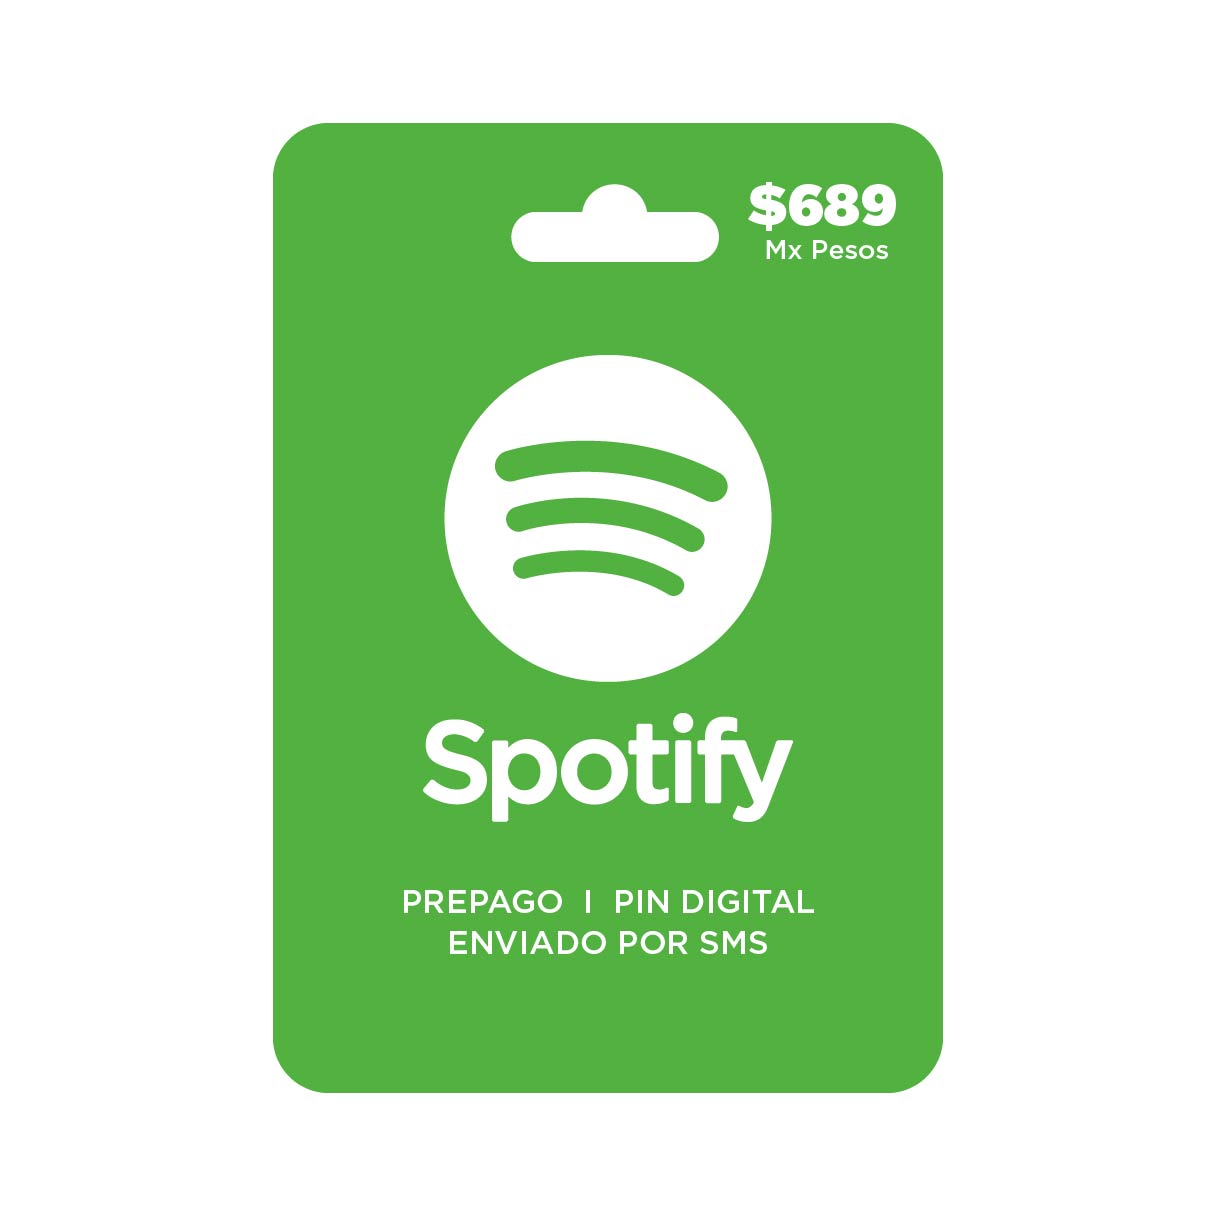 Spotify $689 tarjeta prepago, pin digital